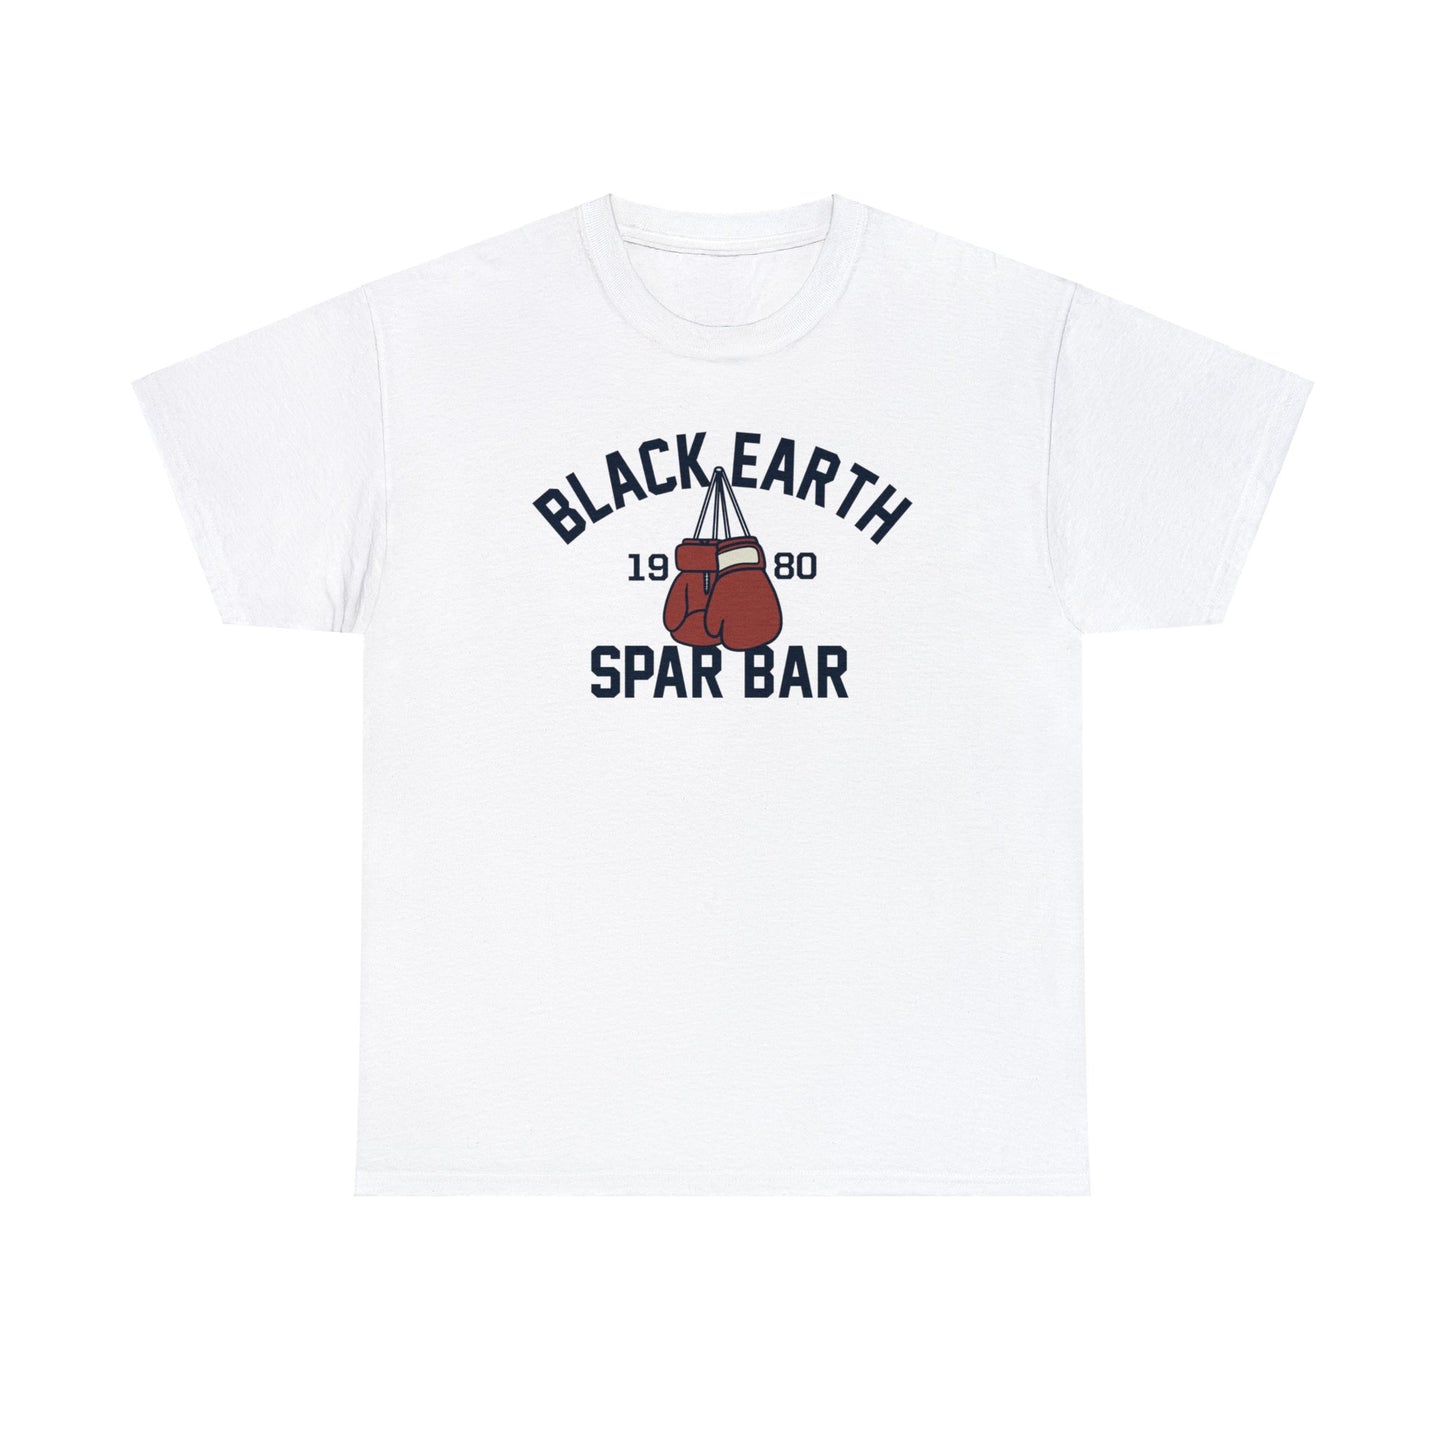 Black Earth Spar Bar by Pinguin Unisex Heavy Cotton Tee